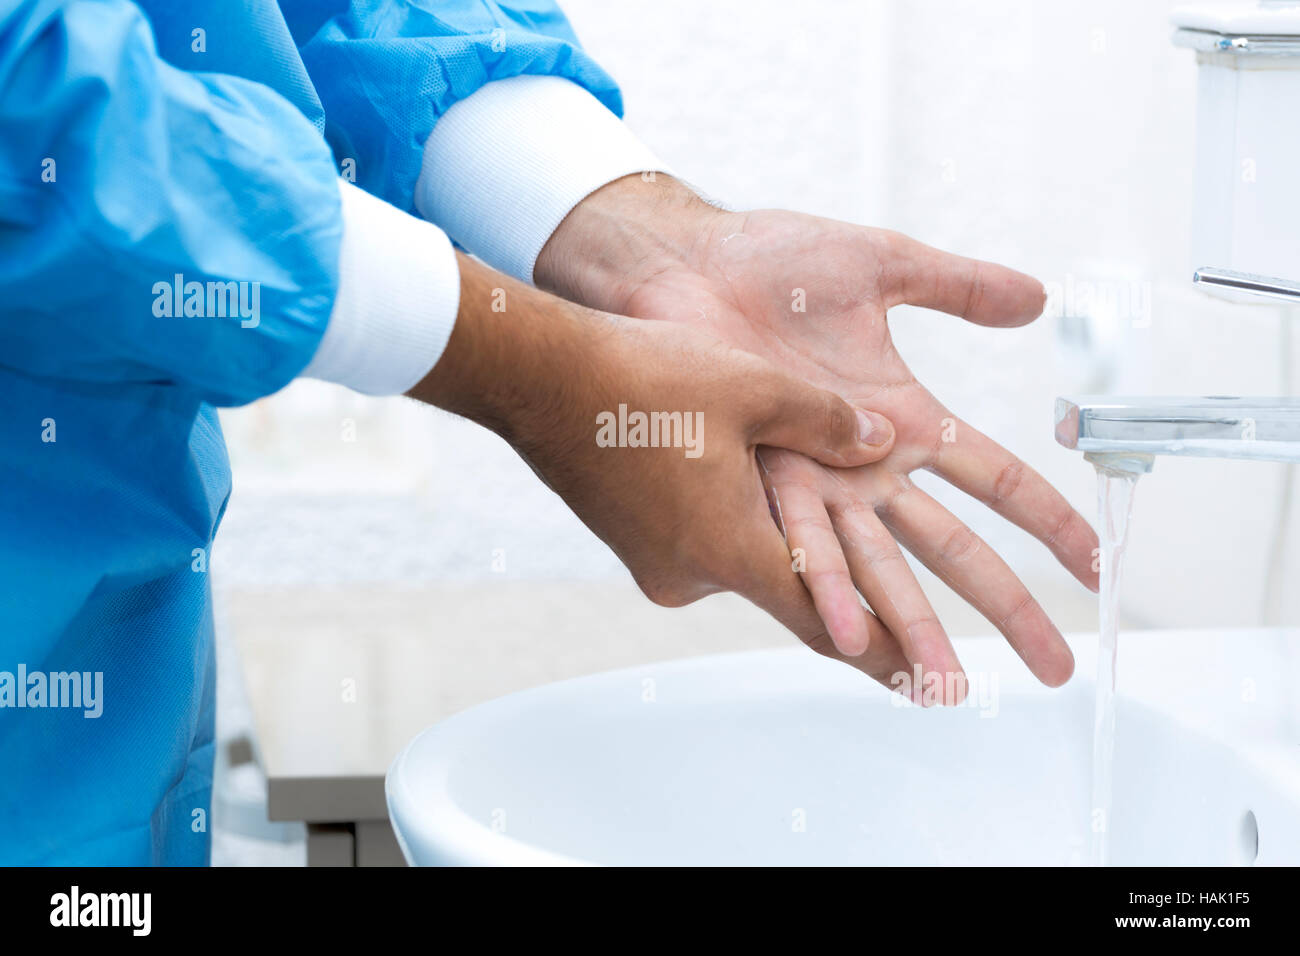 surgeon washing hands before surgery Stock Photo